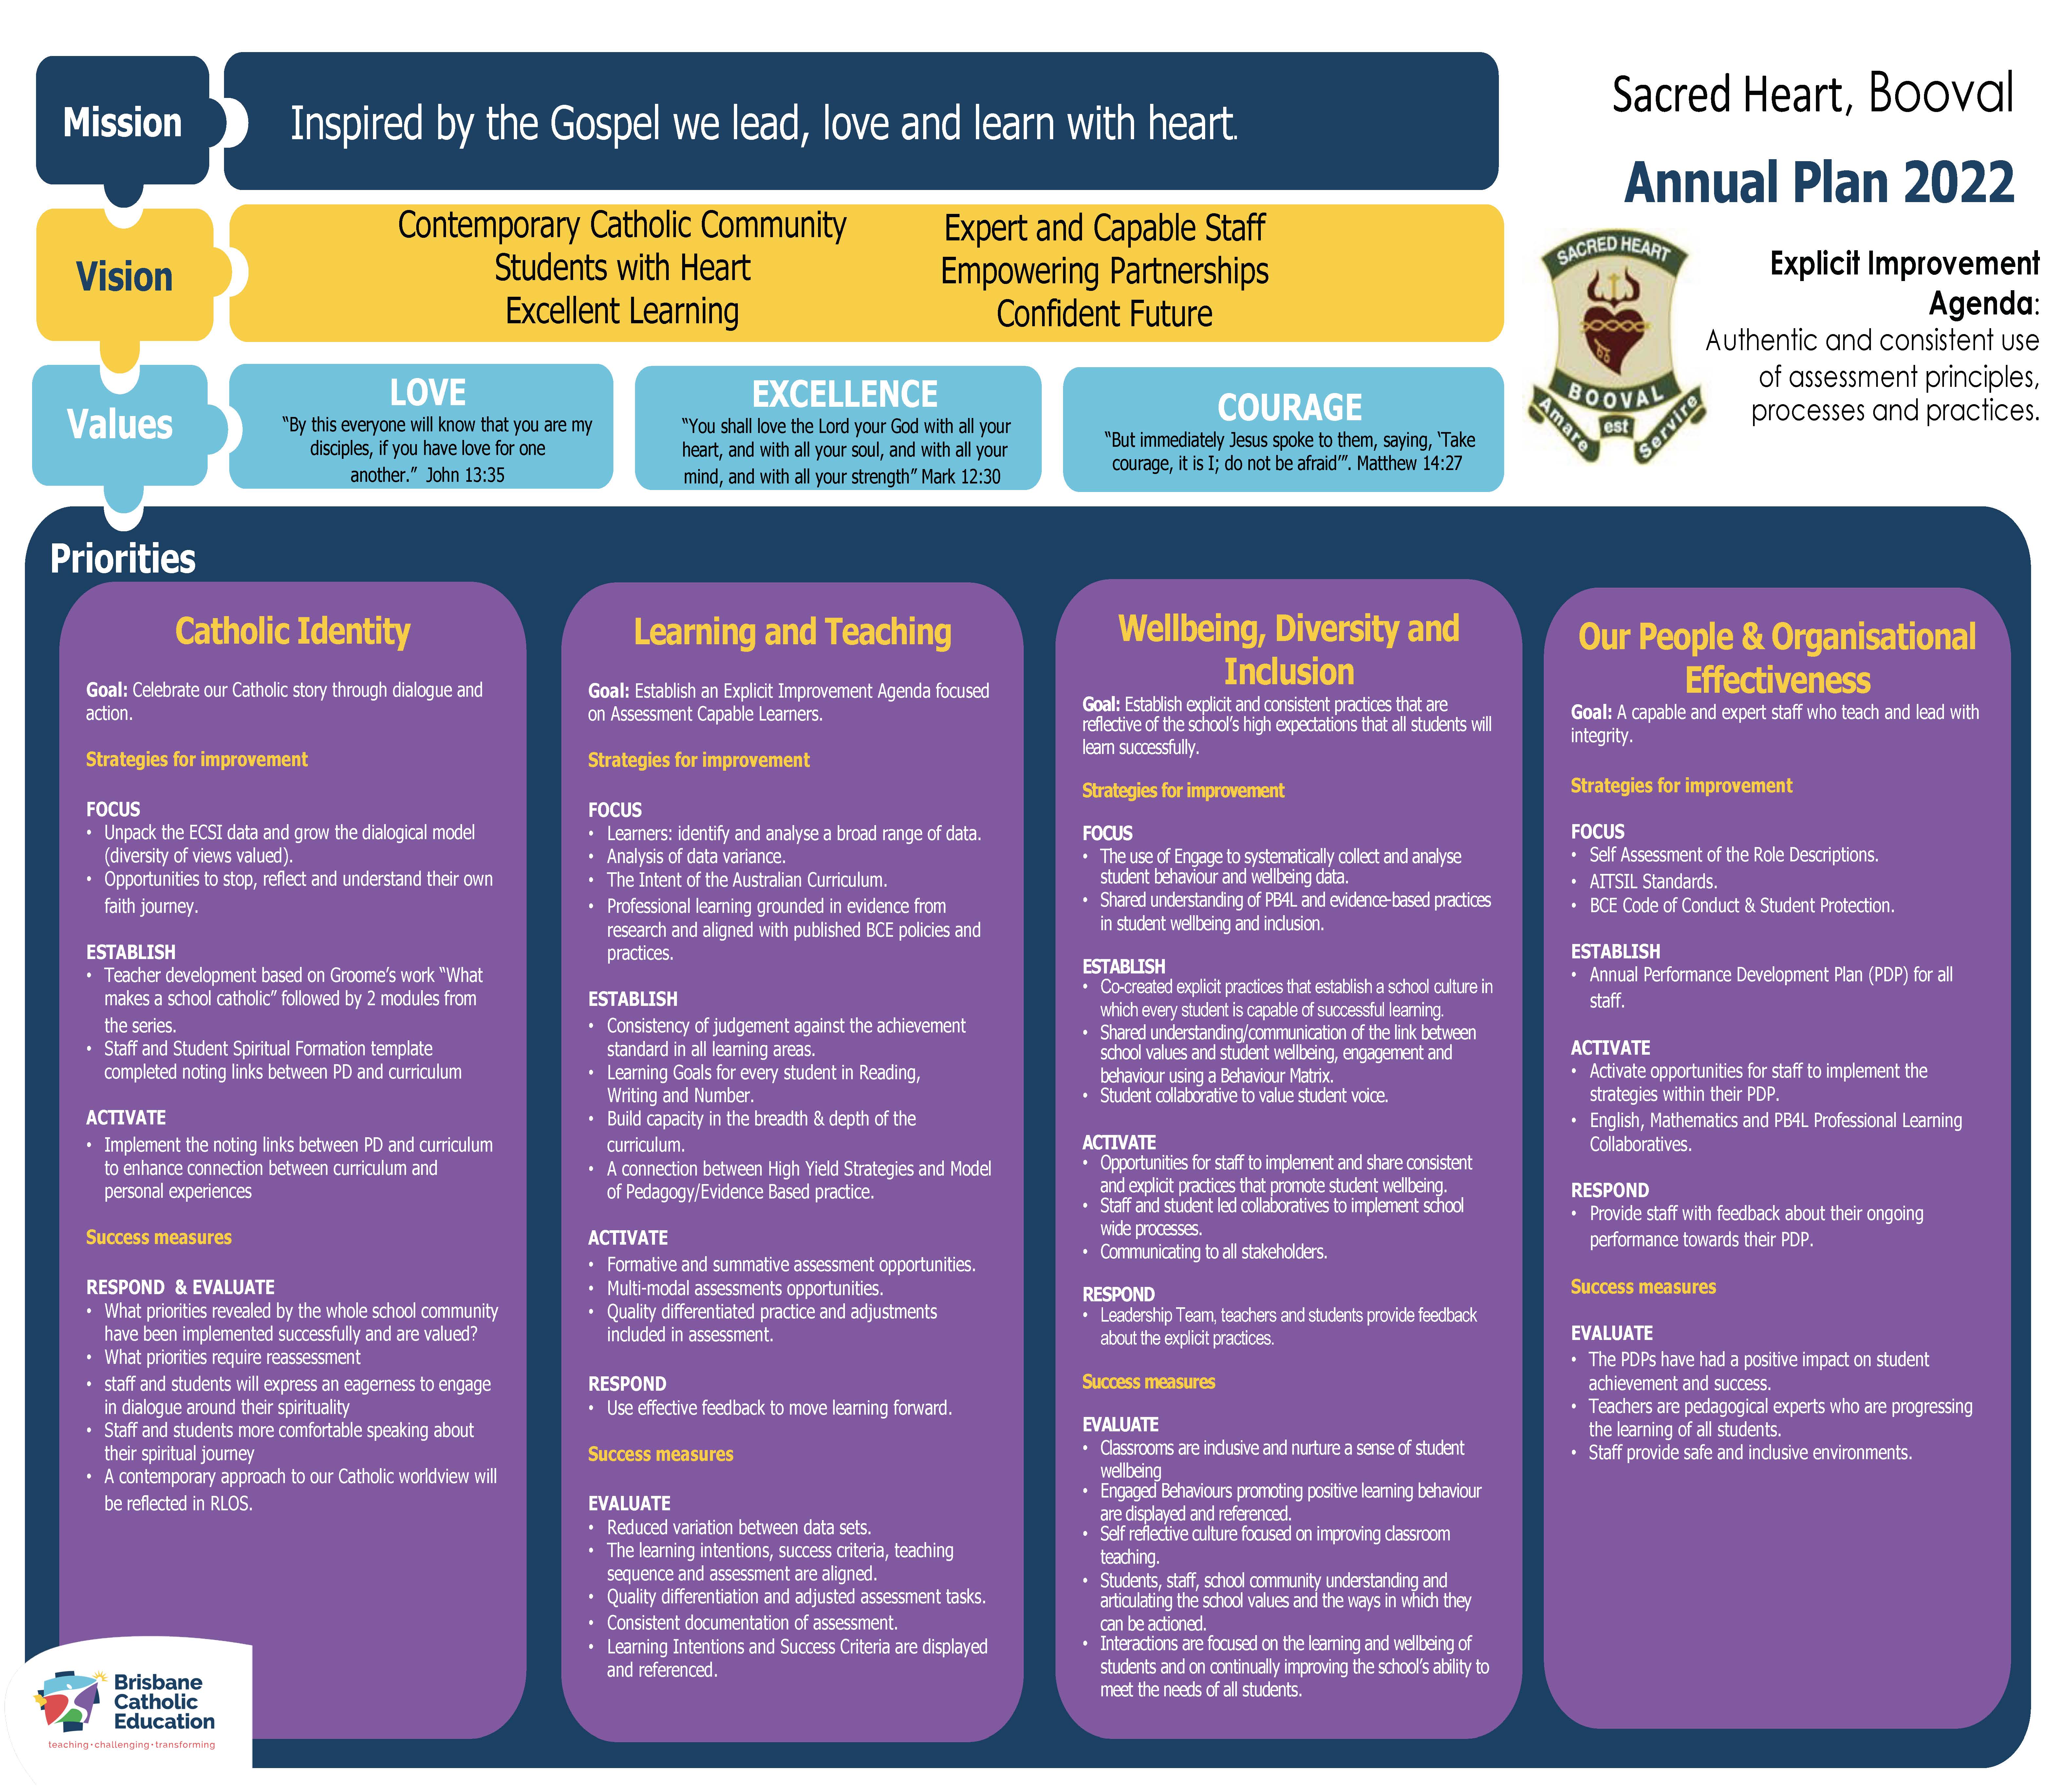 2022 Sacred Heart Annual Plan.jpg